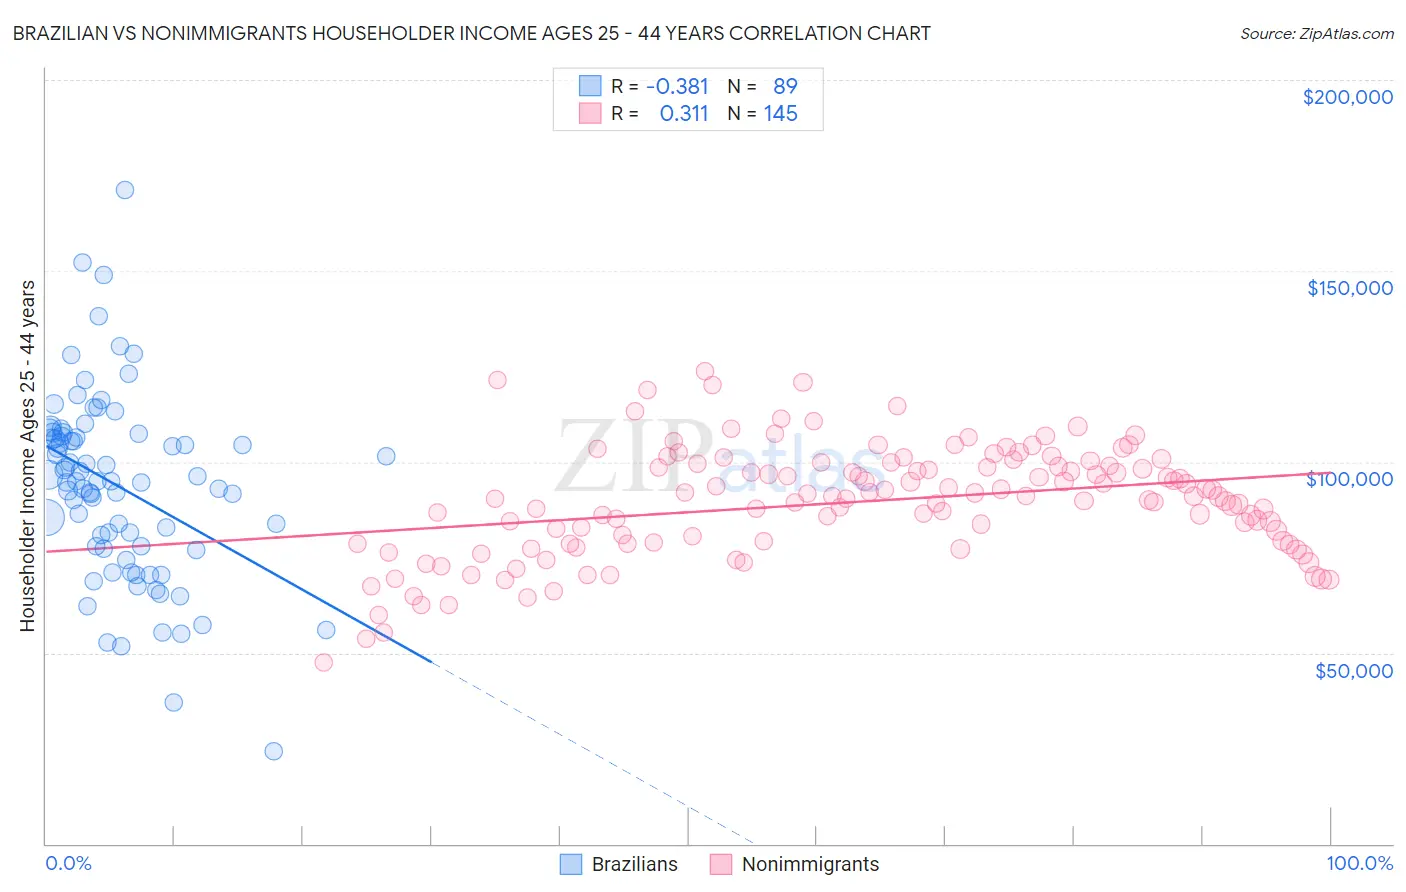 Brazilian vs Nonimmigrants Householder Income Ages 25 - 44 years